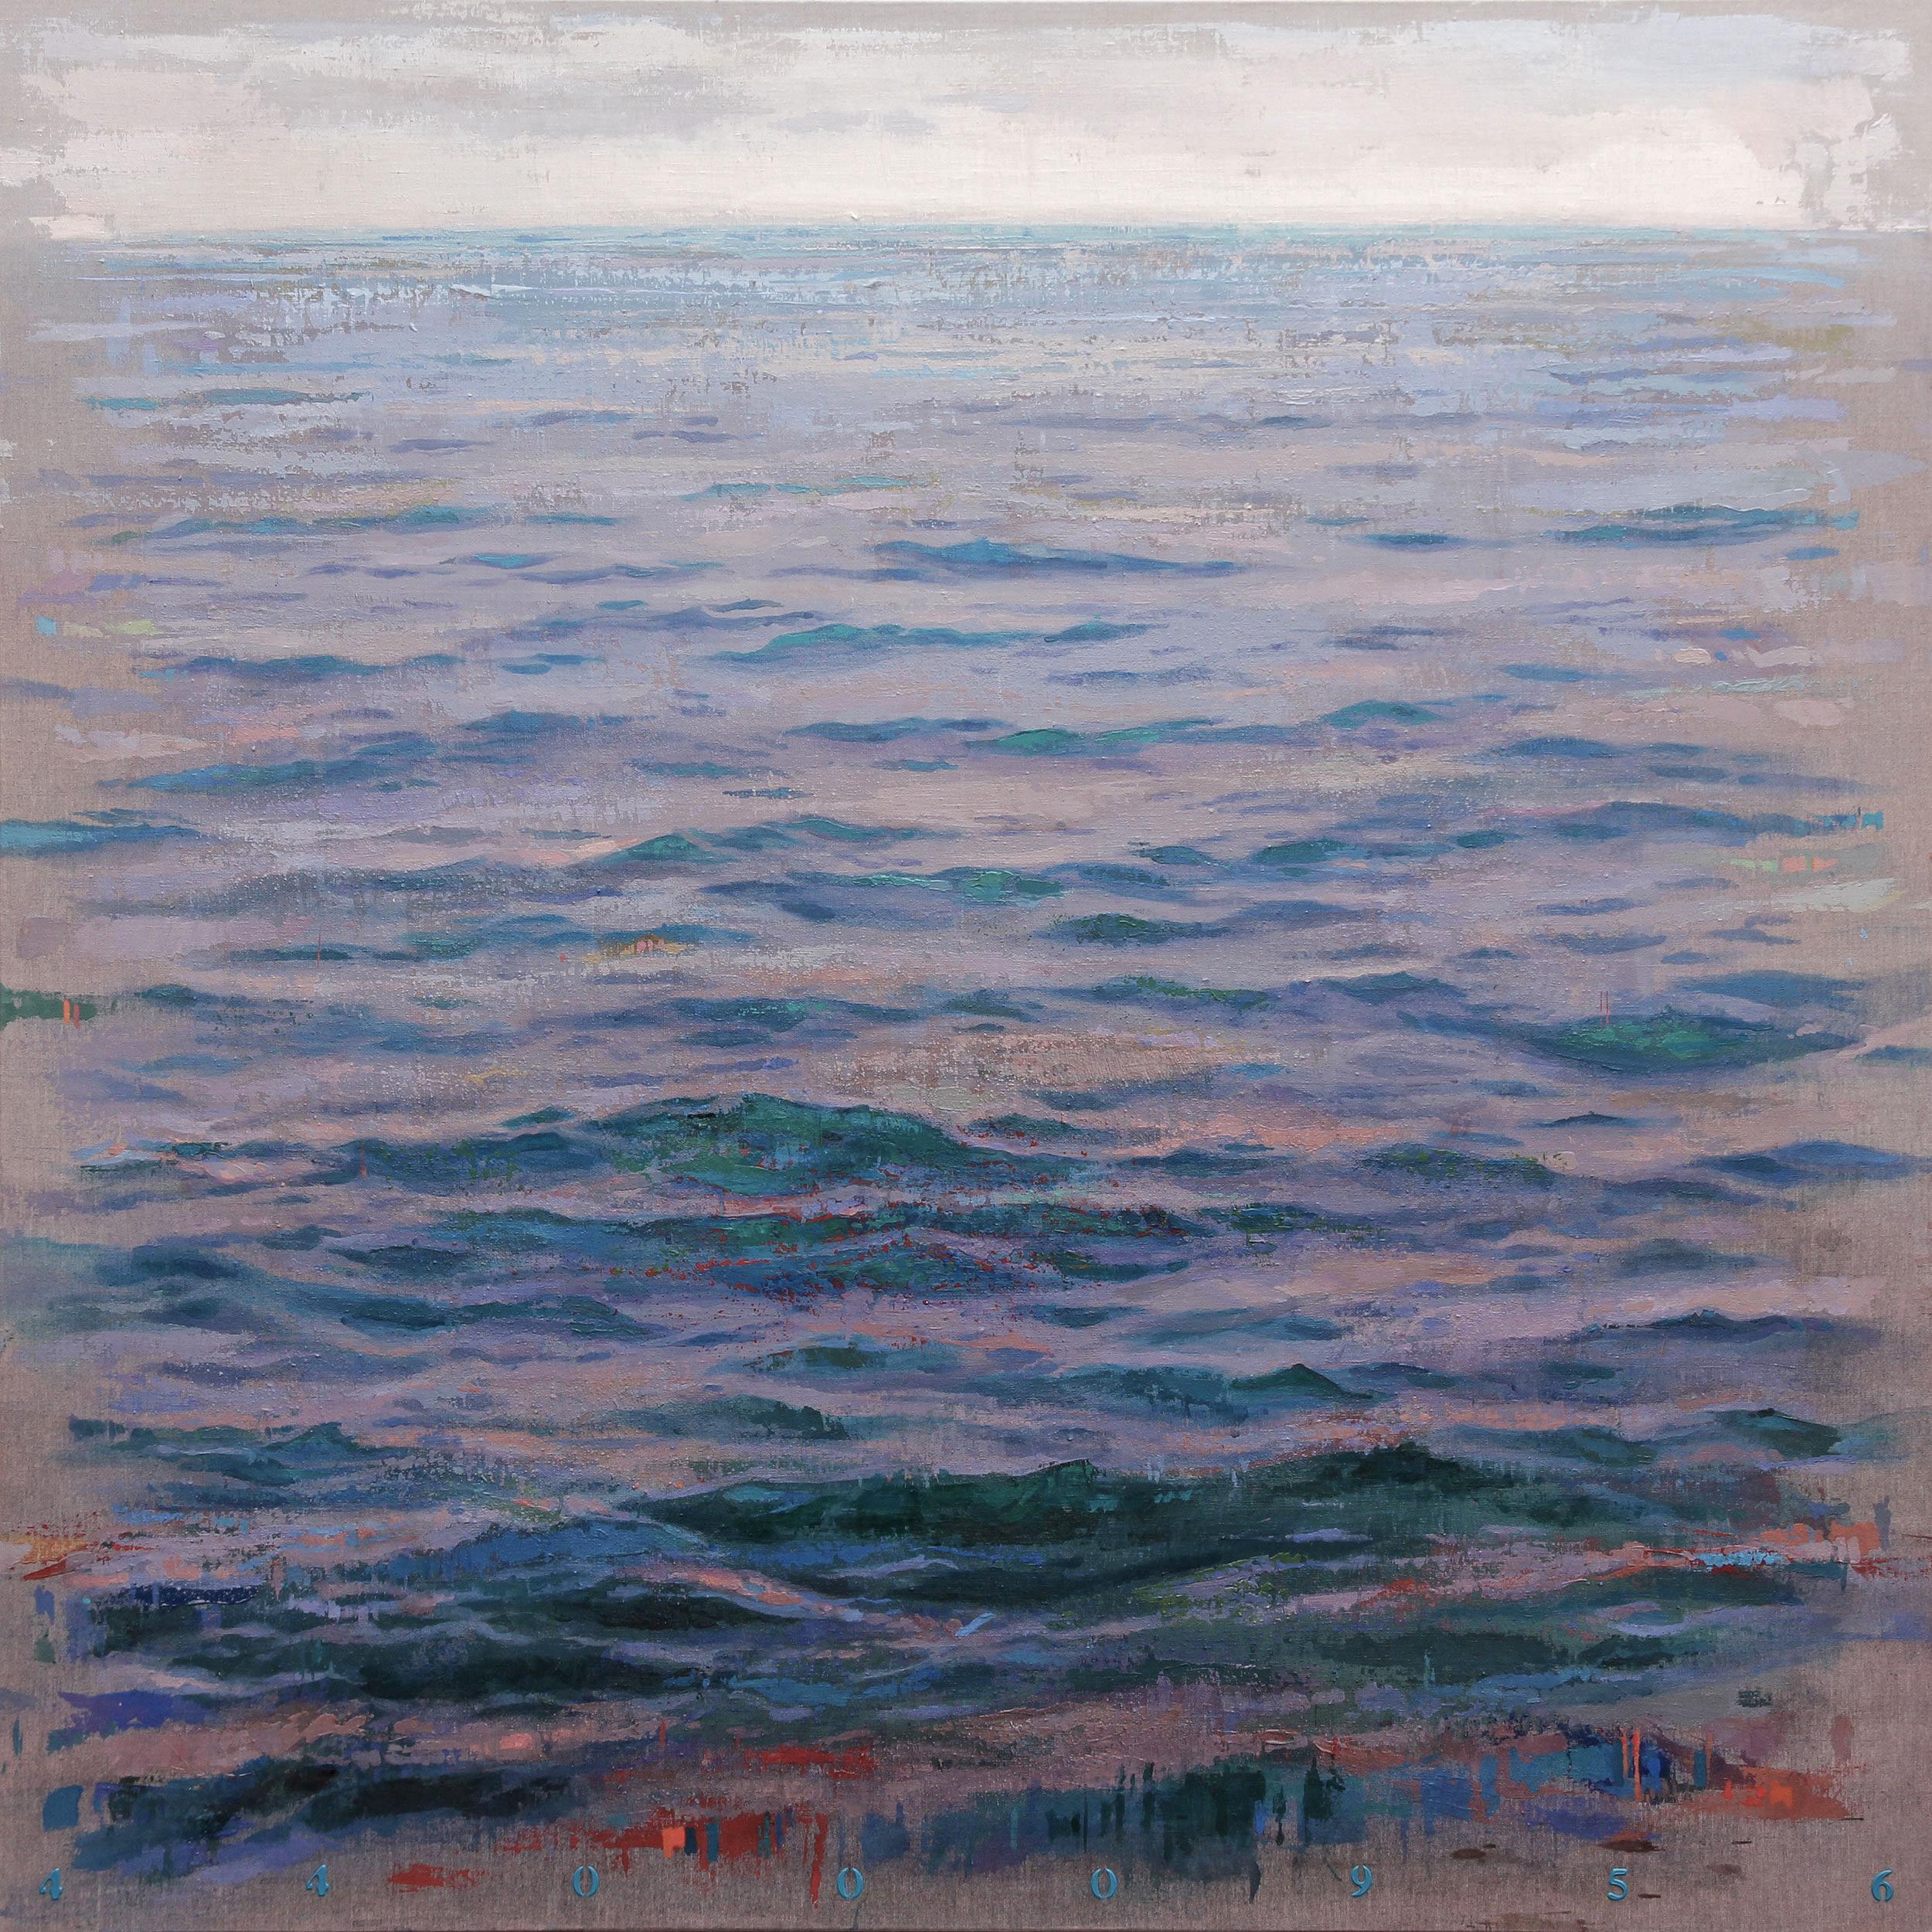 Sea Blue - Large Oil Painting of the Sea by Spanish Painter Albert Vidal